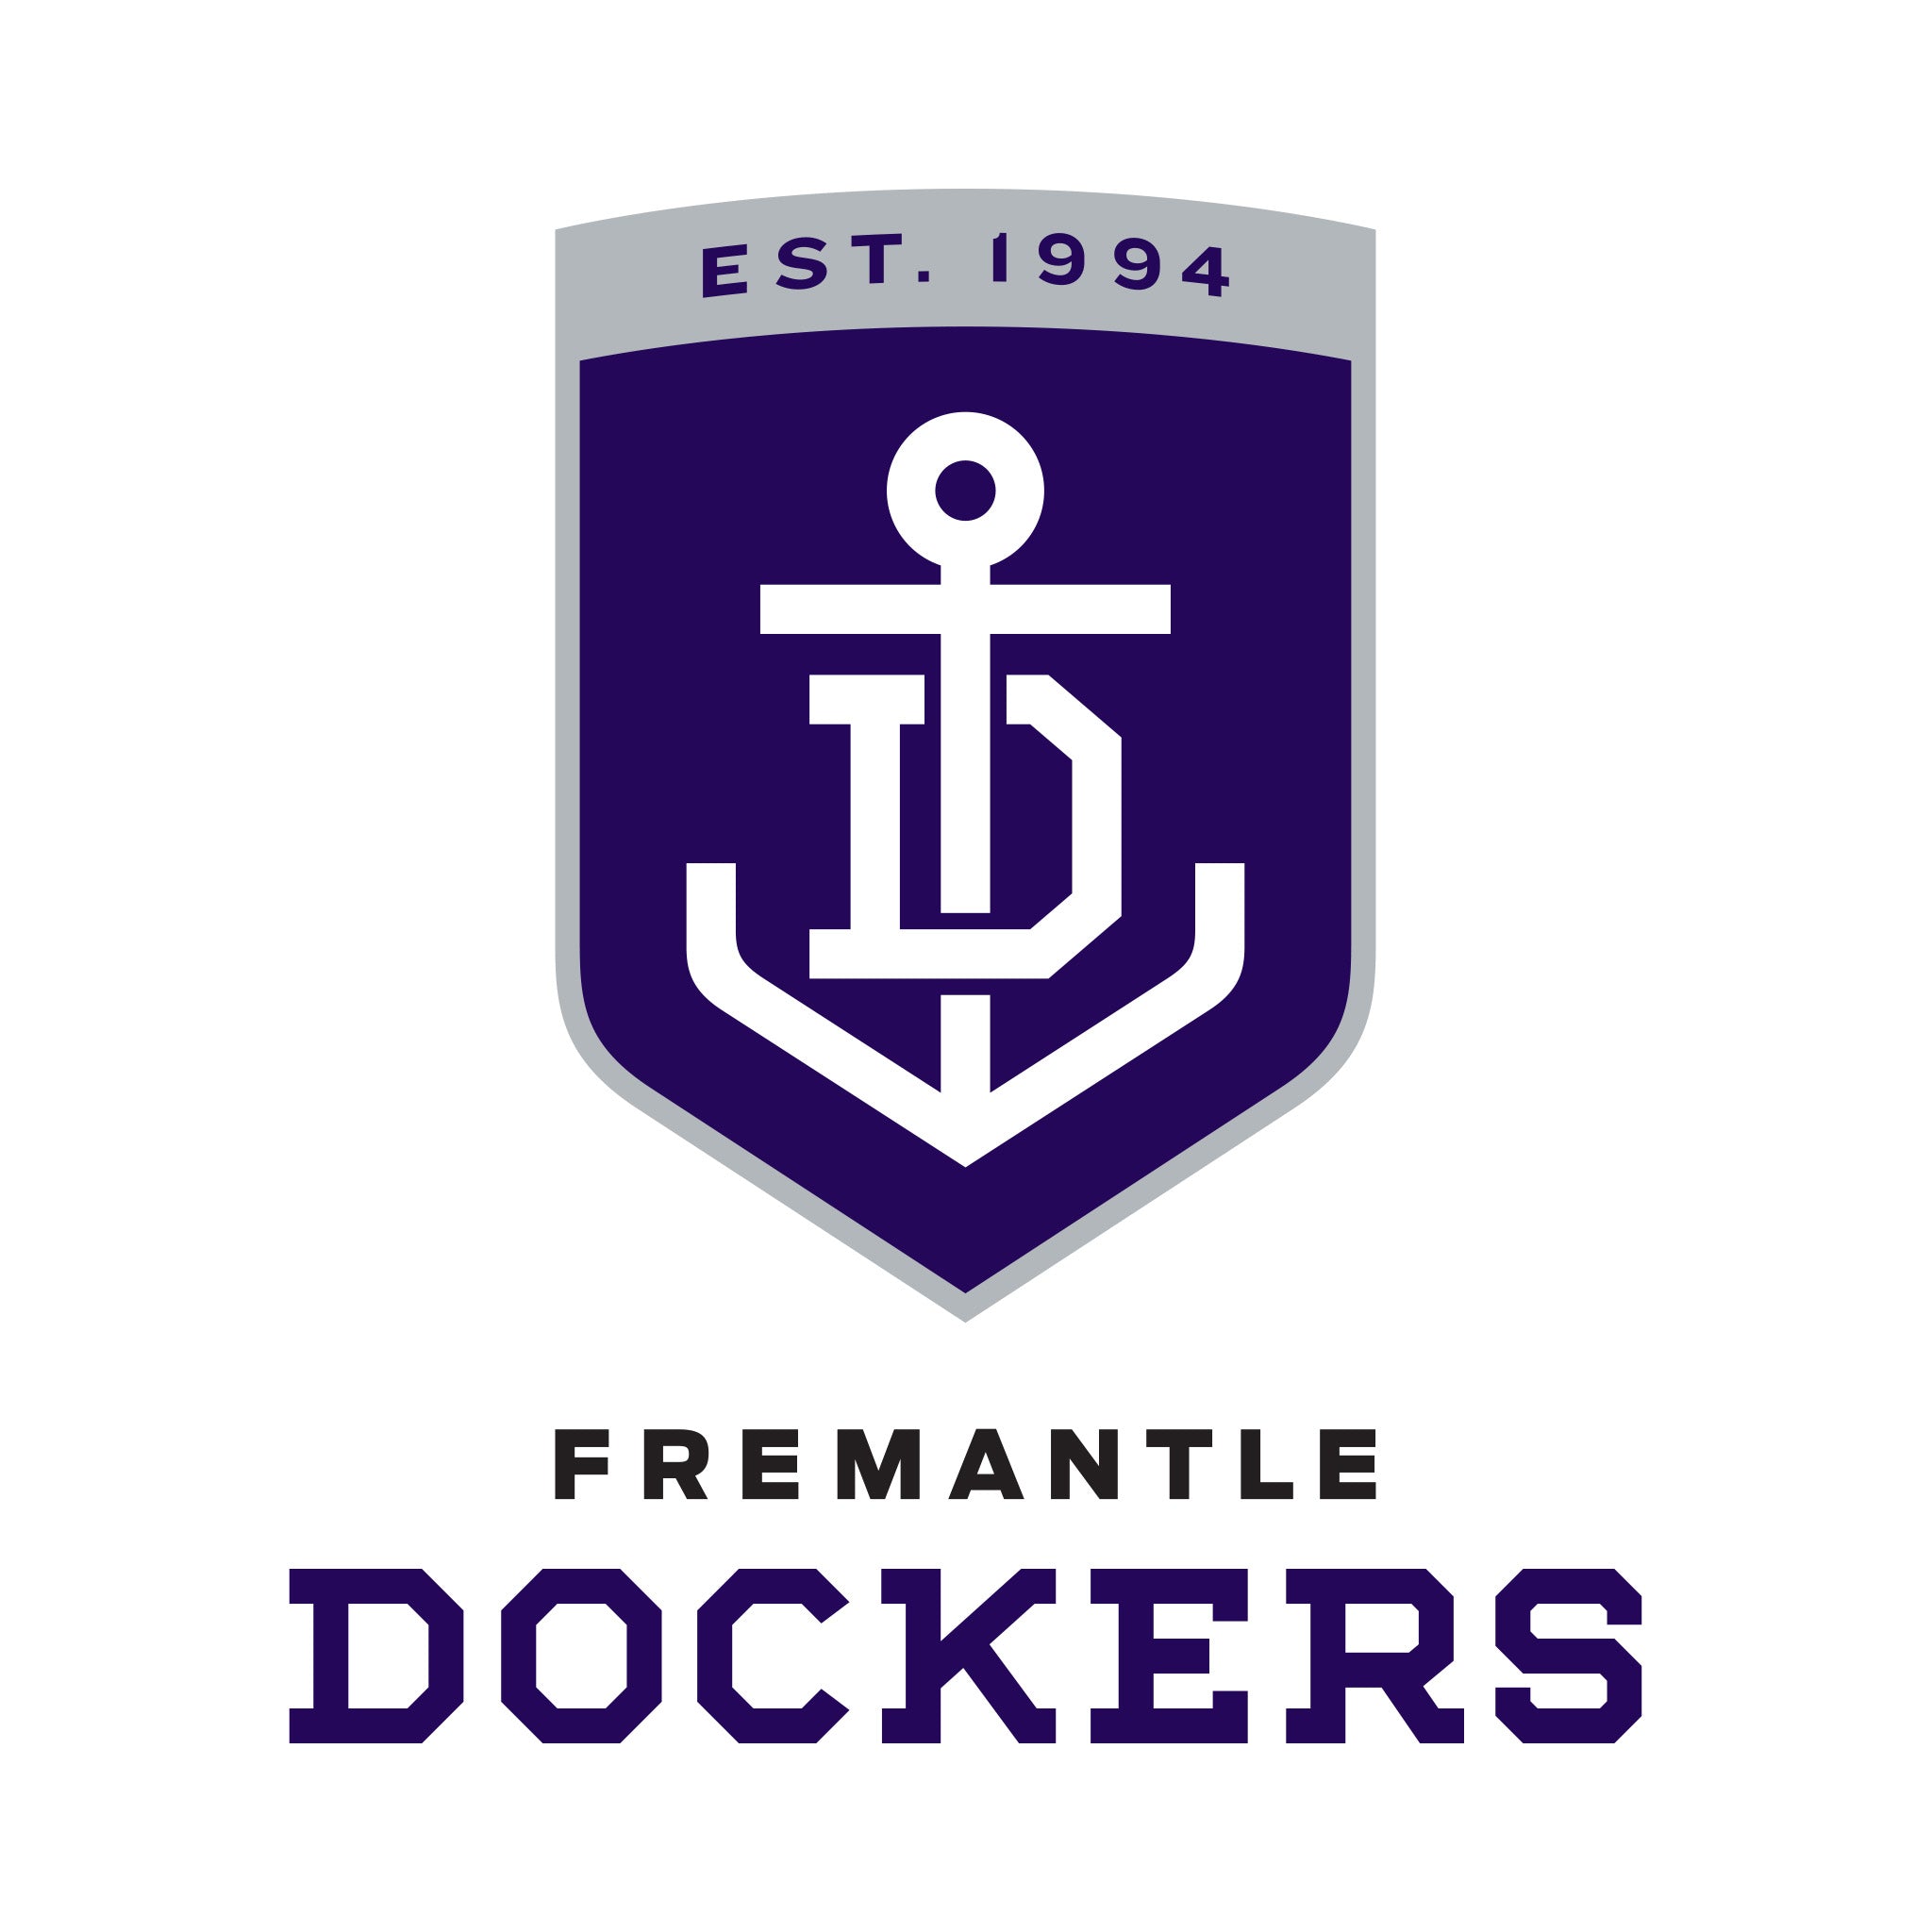 AFL Fremantle Dockers Merchandise by Ashtabula